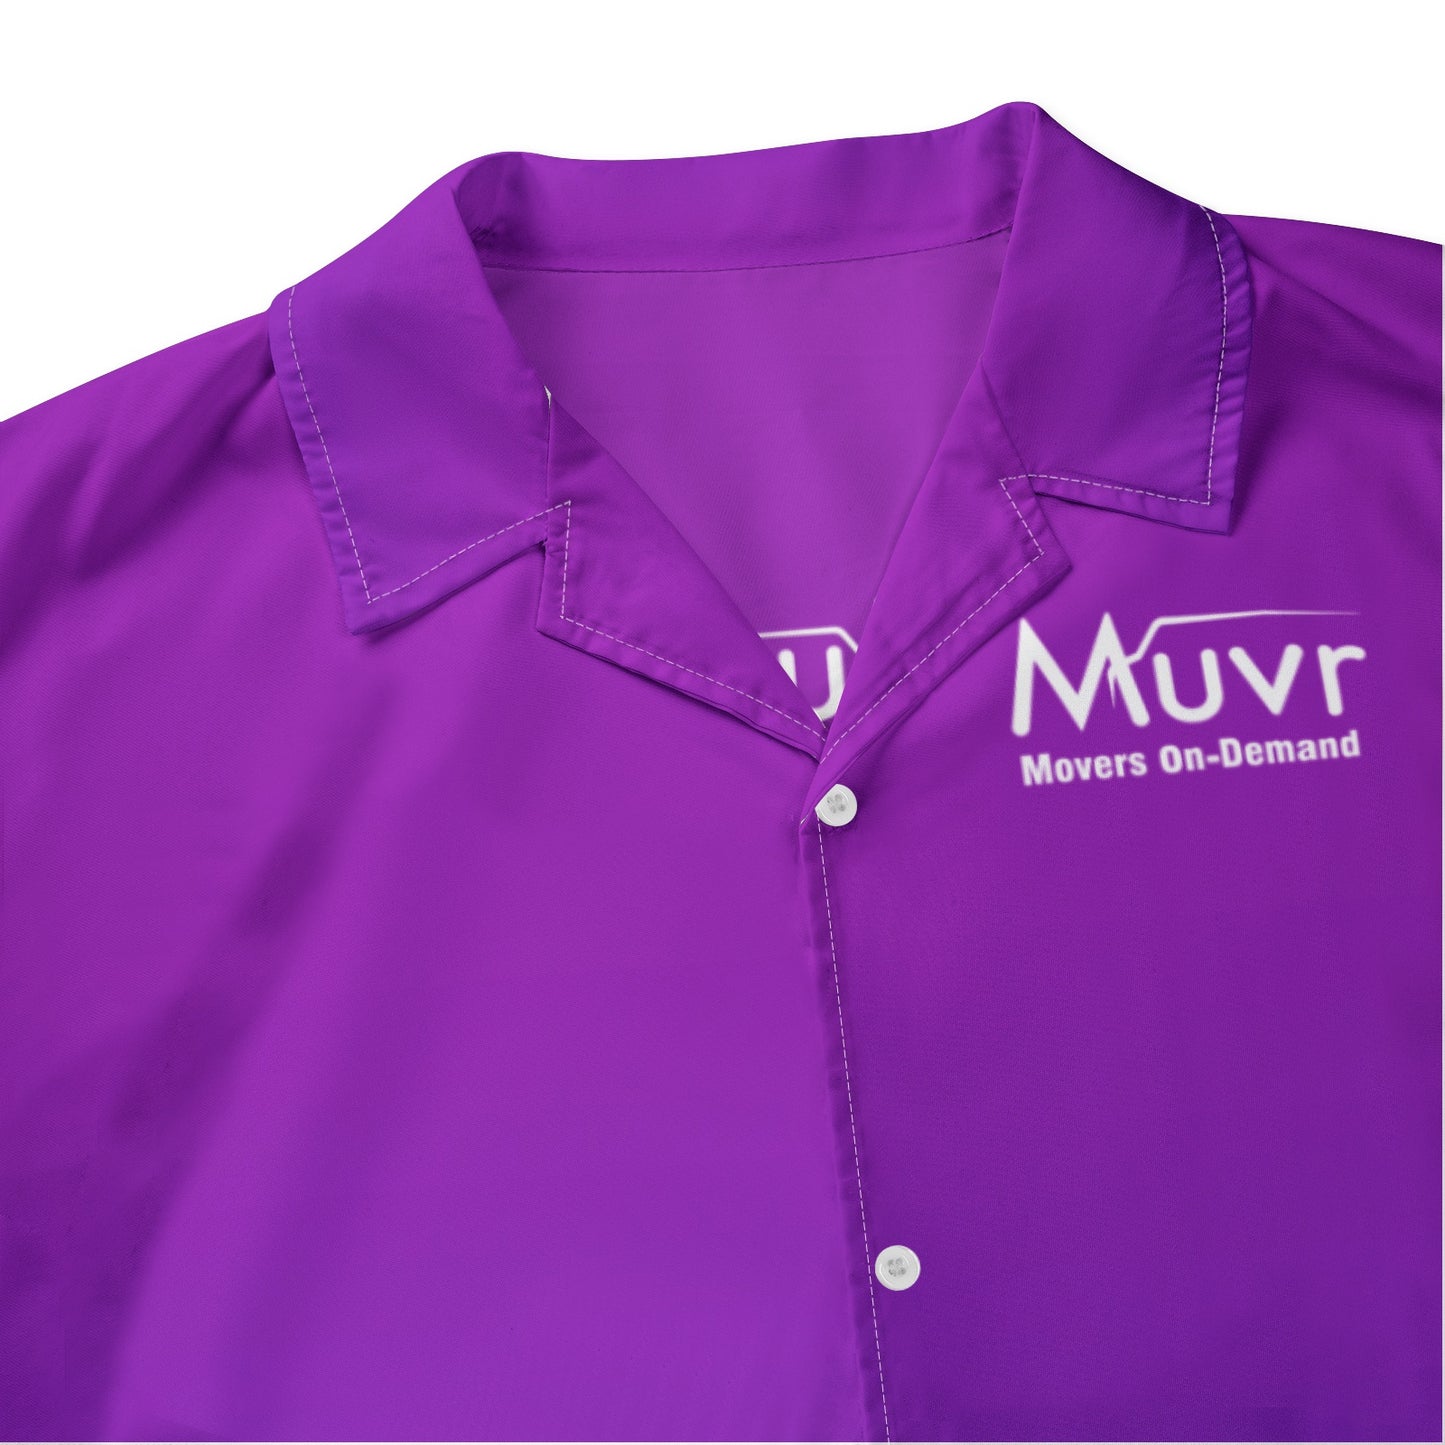 Muvr Men's Hawaiian Shirt Set